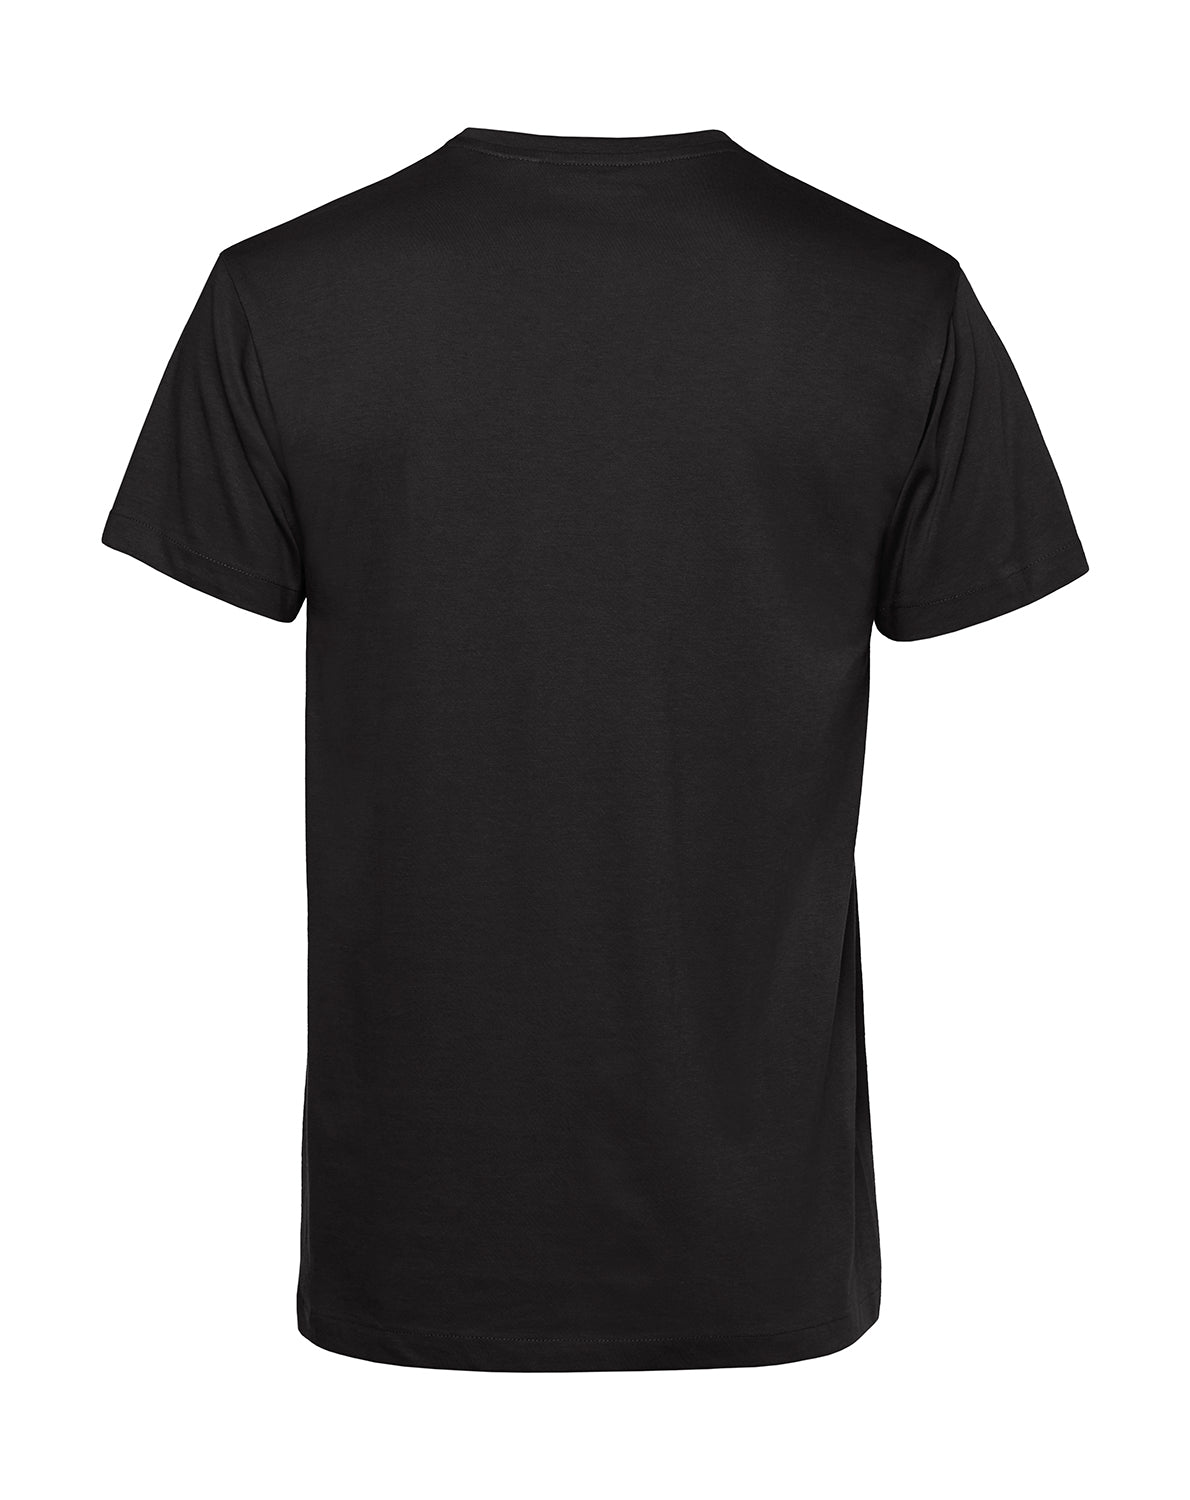 Männer T-Shirt | PÄLZRWald Zwei | schwarz | Logo weiss